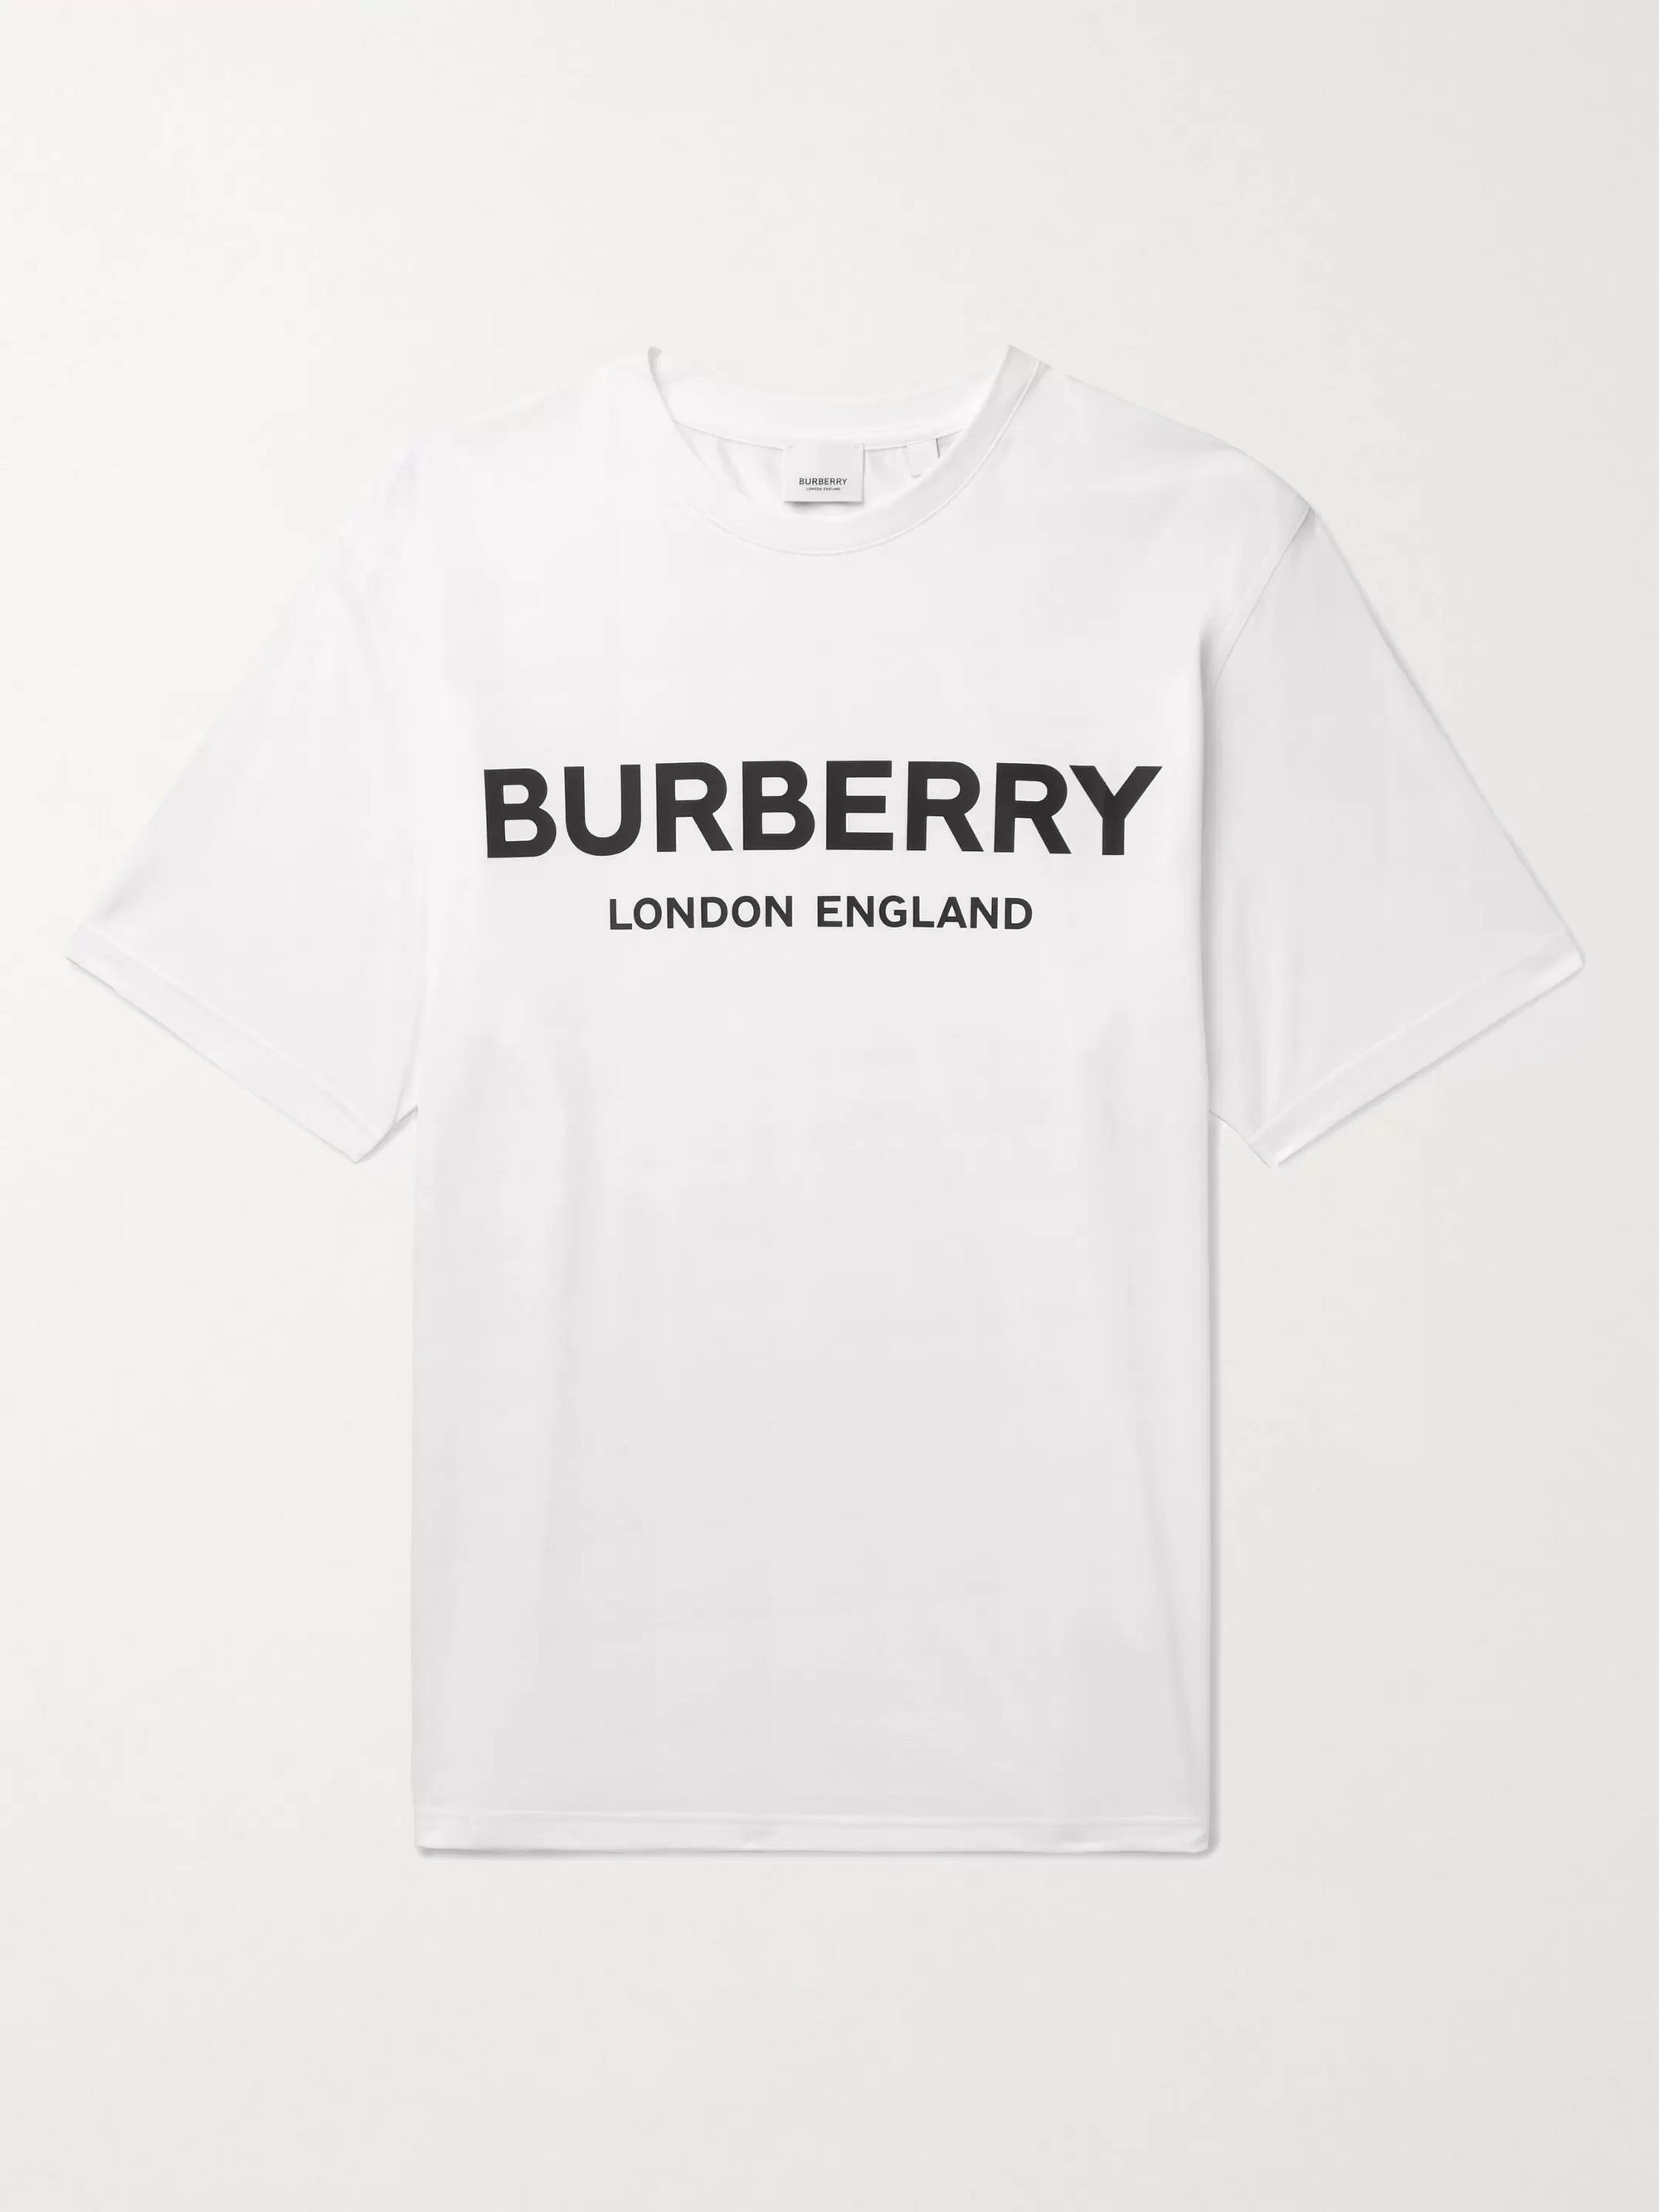 burberry jersey